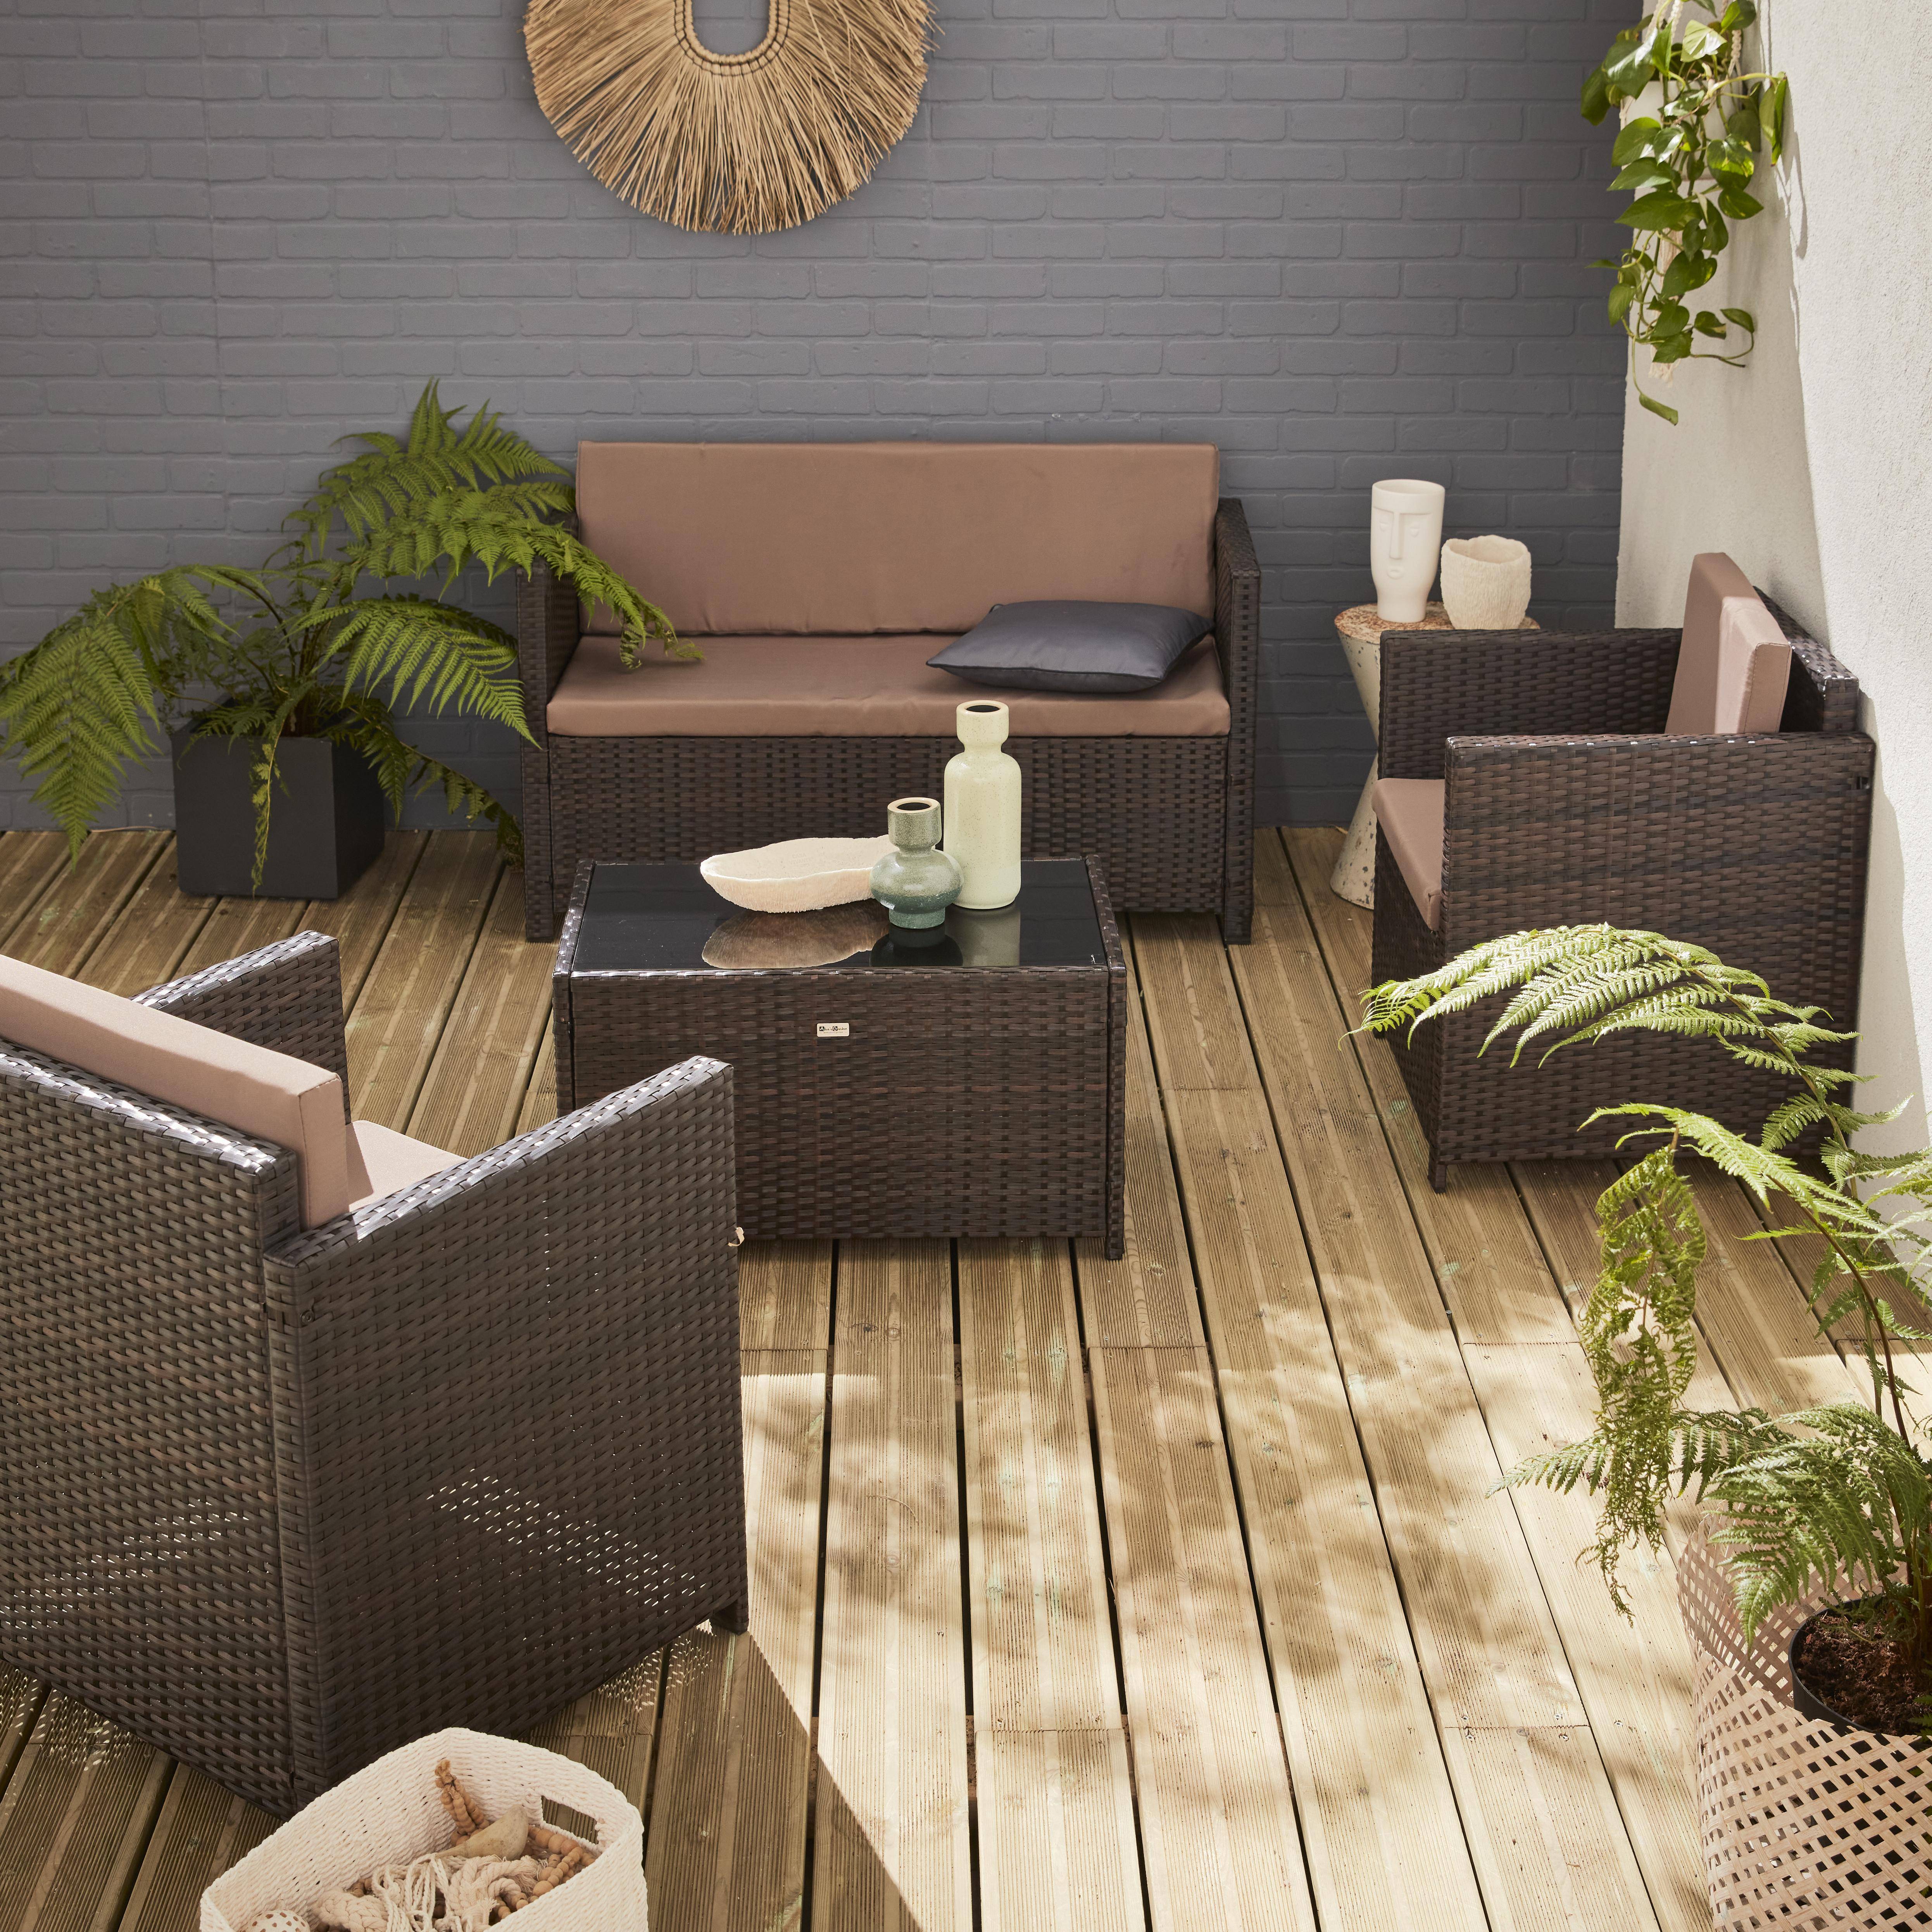 4-seater polyrattan garden sofa set - sofa, 2 armchairs, coffee table - Perugia - Brown rattan, Chocolate cushions Photo1